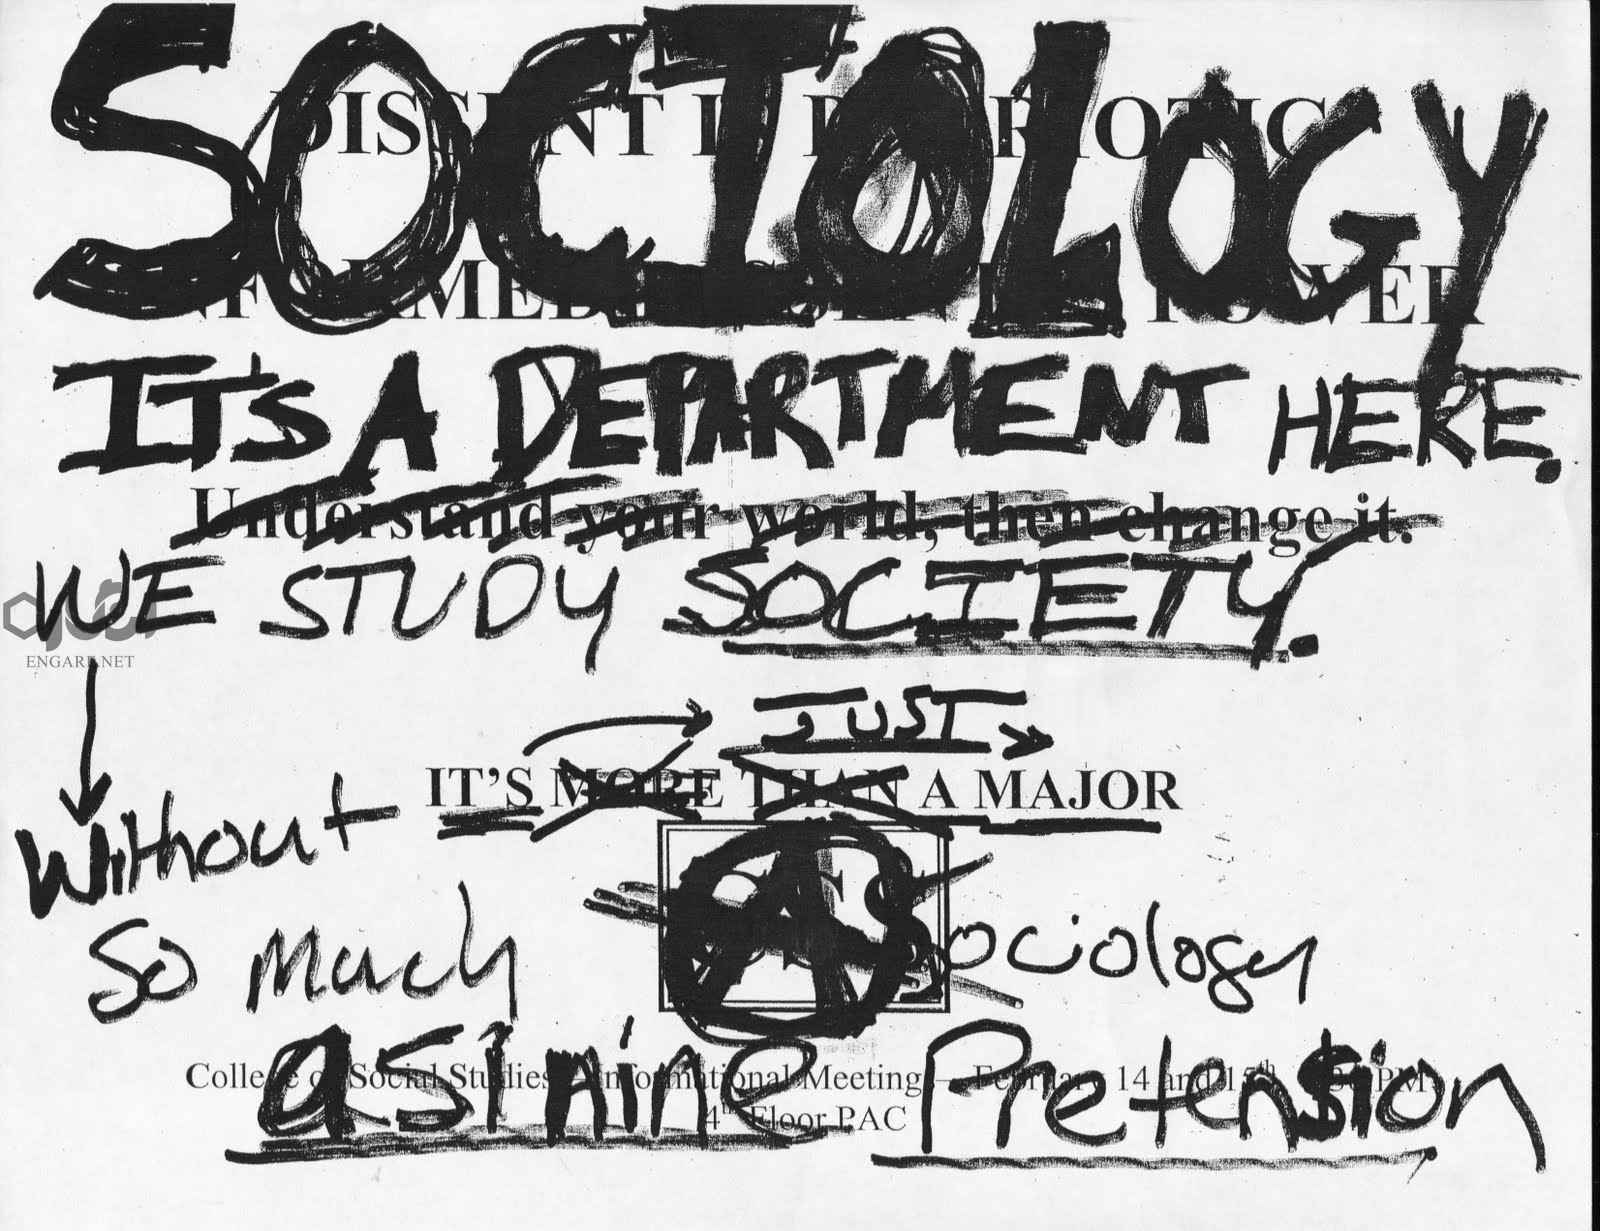 Sociology2005 - یک جامعه‌شناسی برای یک جهان؟ - علوم اسلامی, سارا شریعتی, جامعه شناسی بومی, جامعه شناسی, بومی سازی, اسلامی سازی